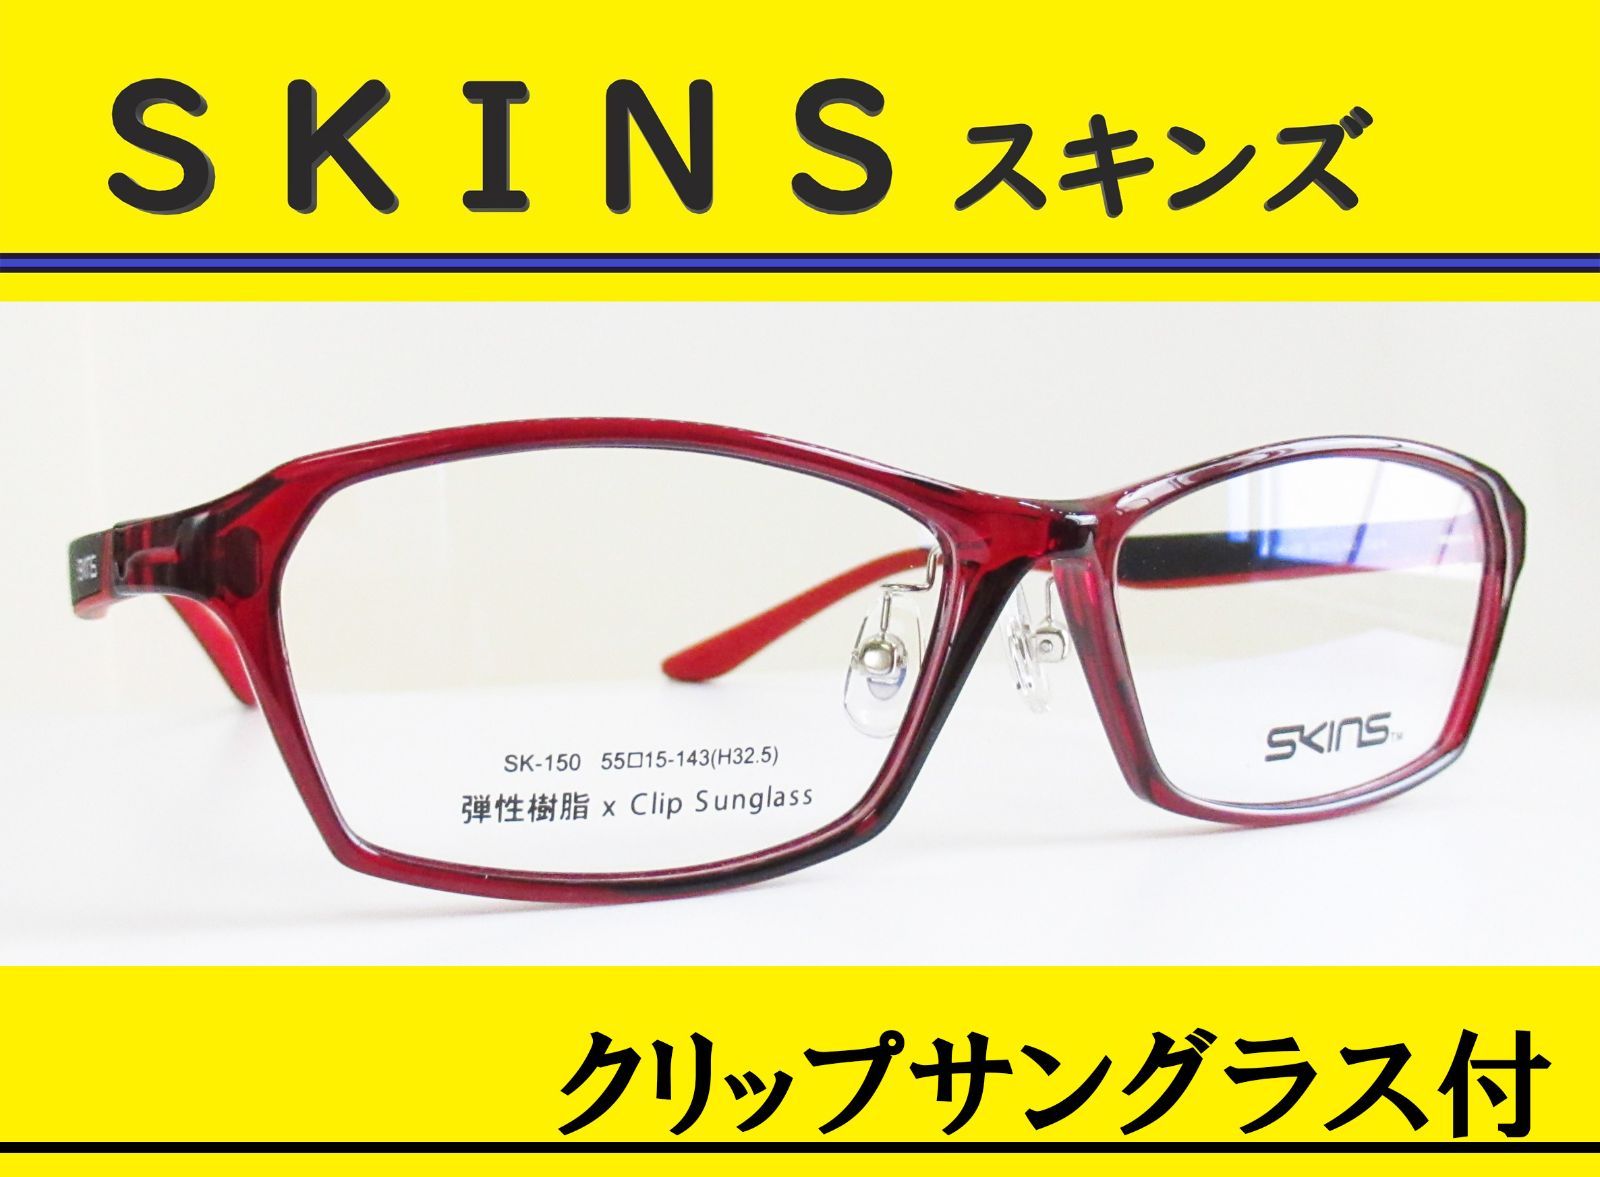 SKINS スキンズ◇クリップサングラス付 メガネフレーム SK-150-4